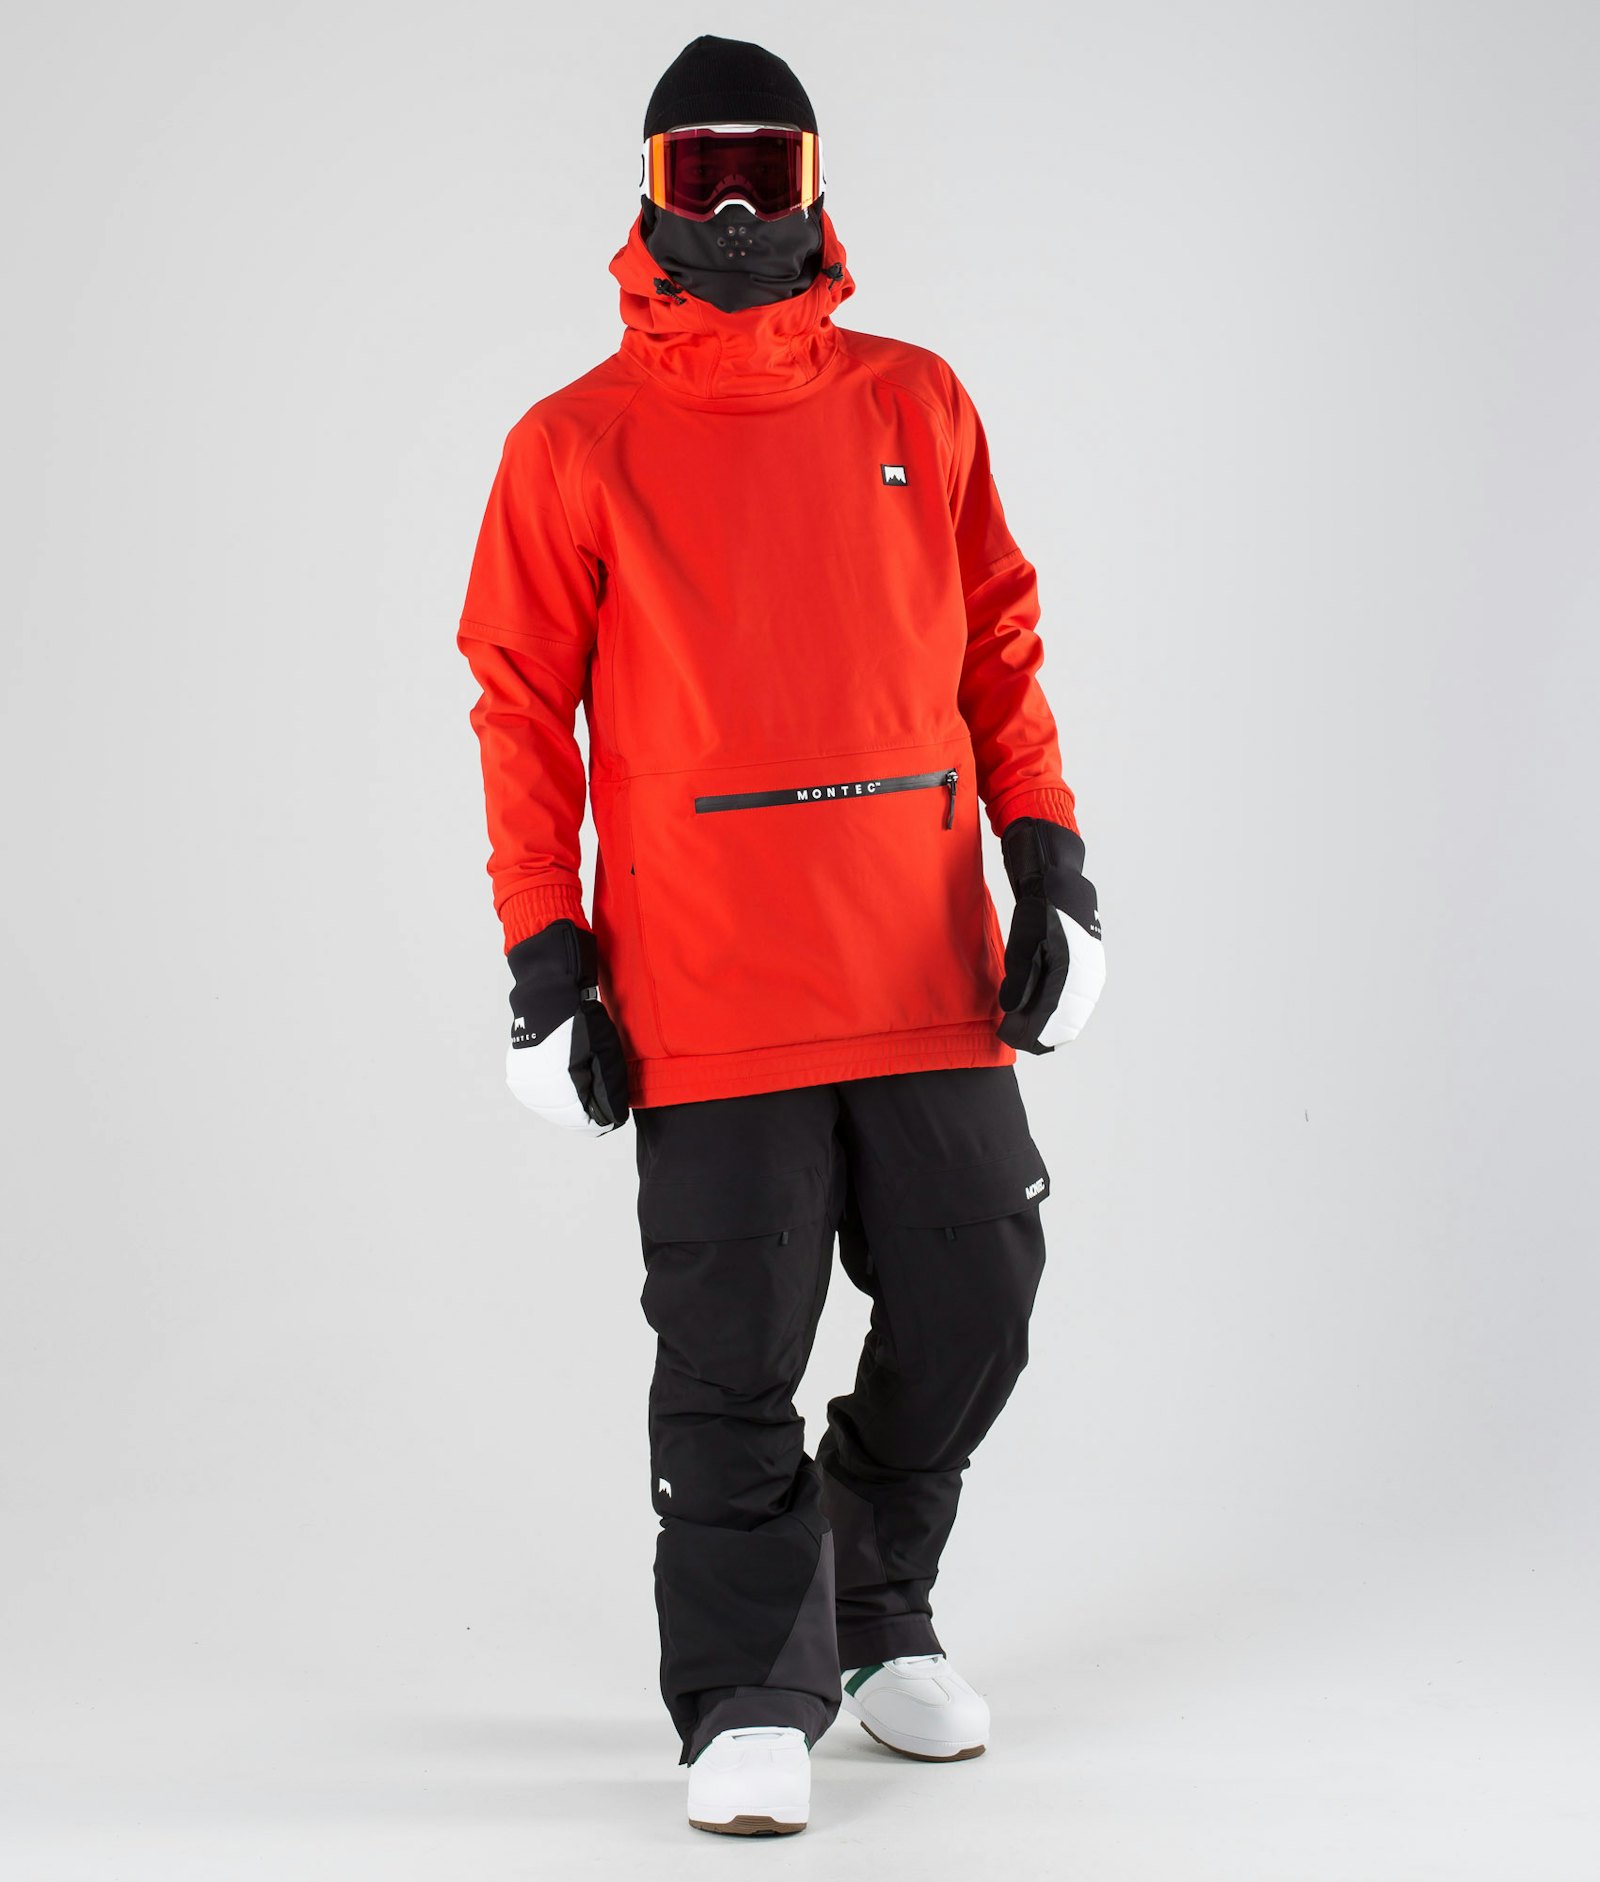 Montec Tempest 2019 Snowboard Jacket Men Red